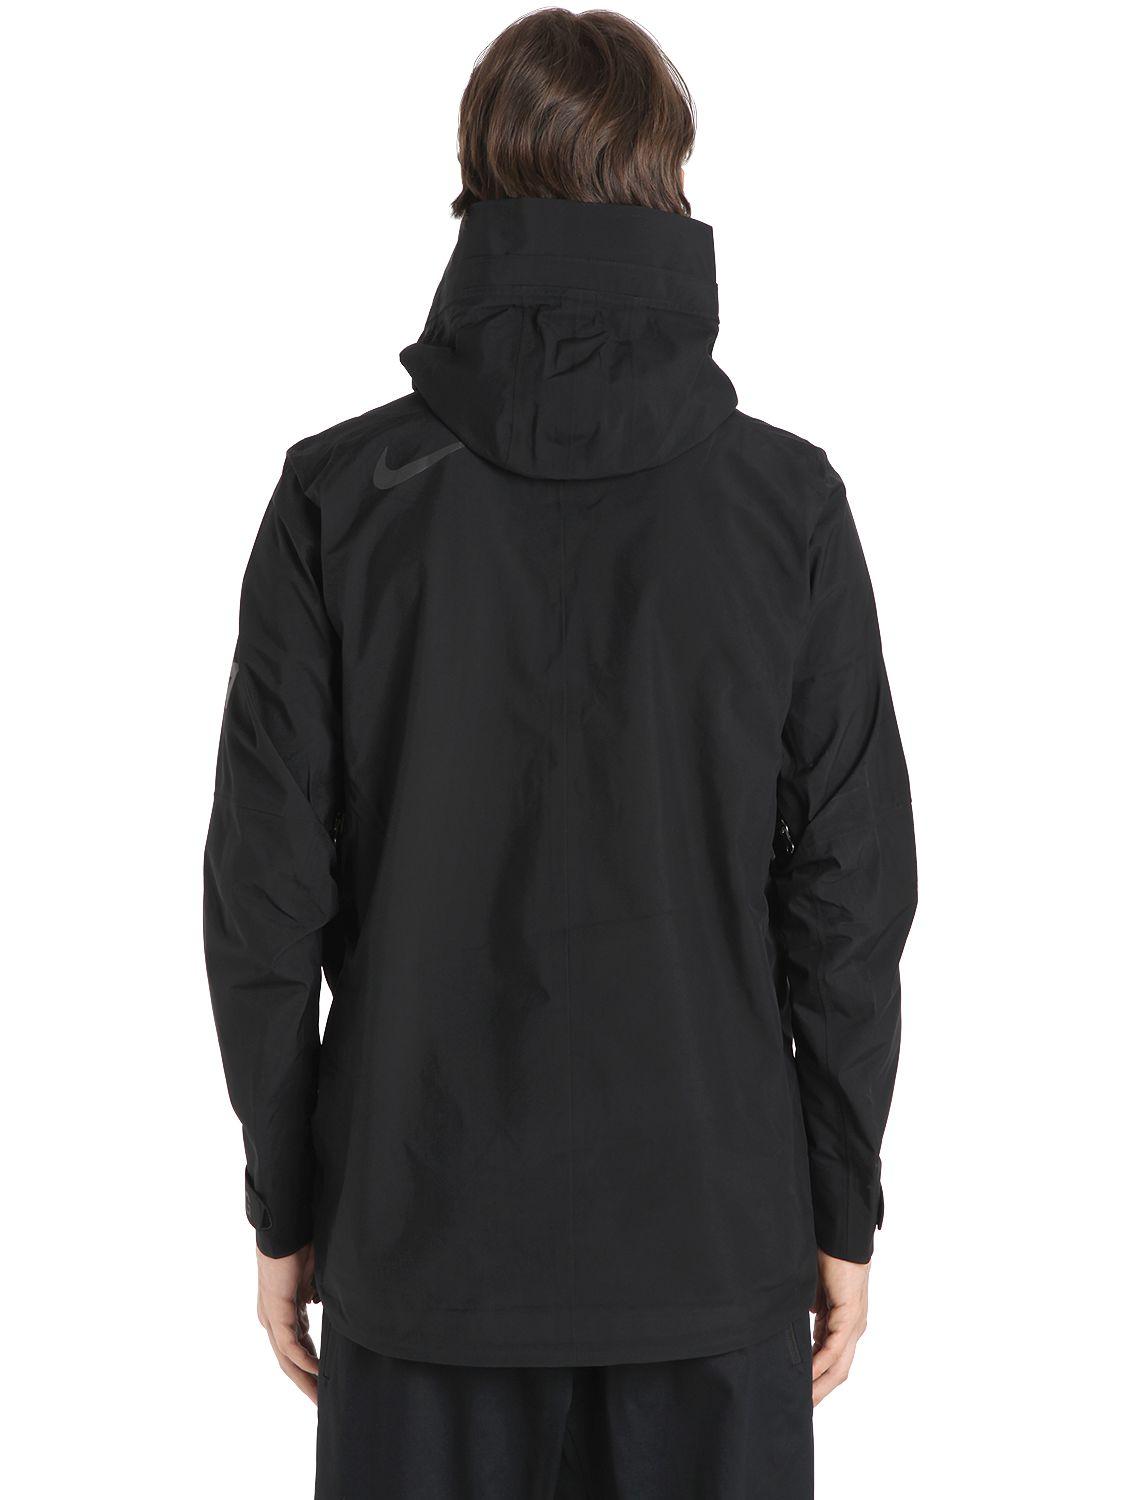 Lyst - Nike Nikelab Acg Alpine Jacket in Black for Men